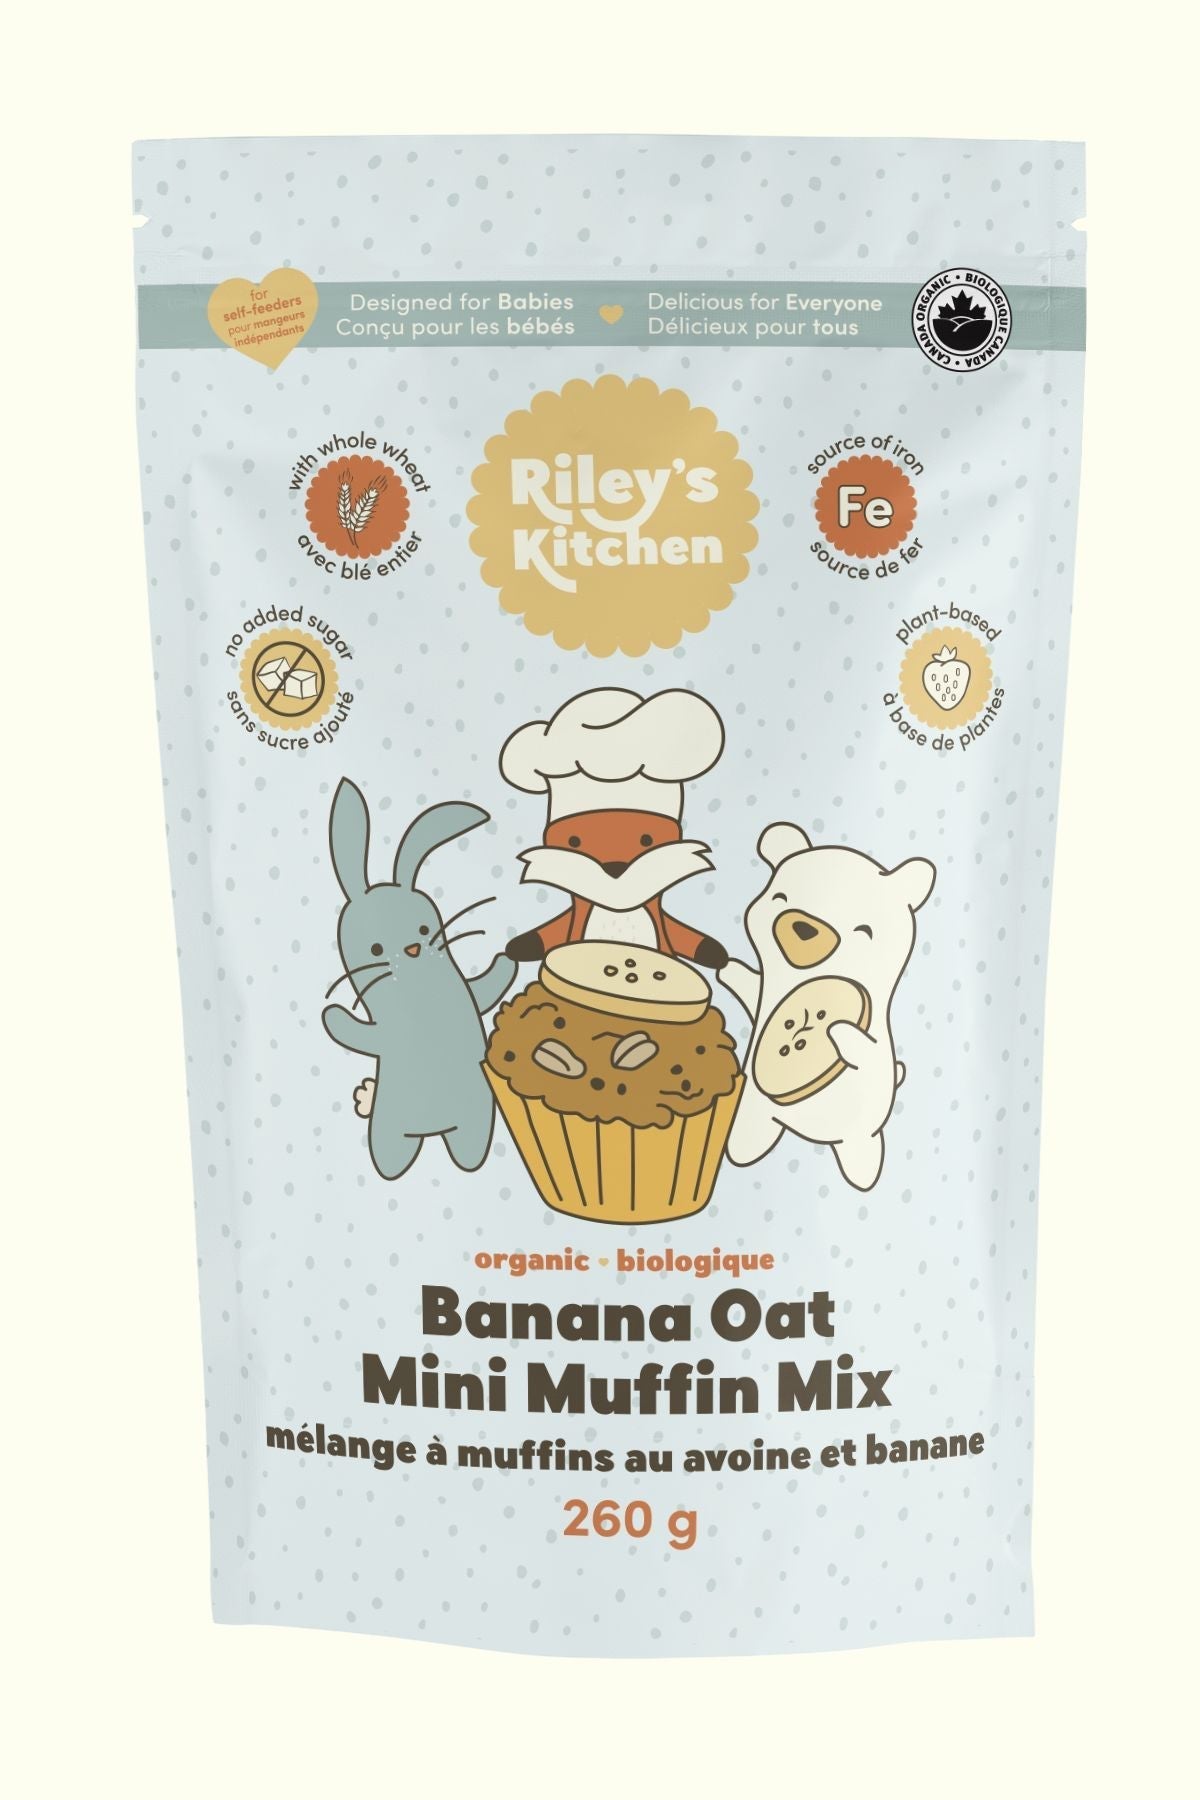 Banana Oat Mini Muffin Mix